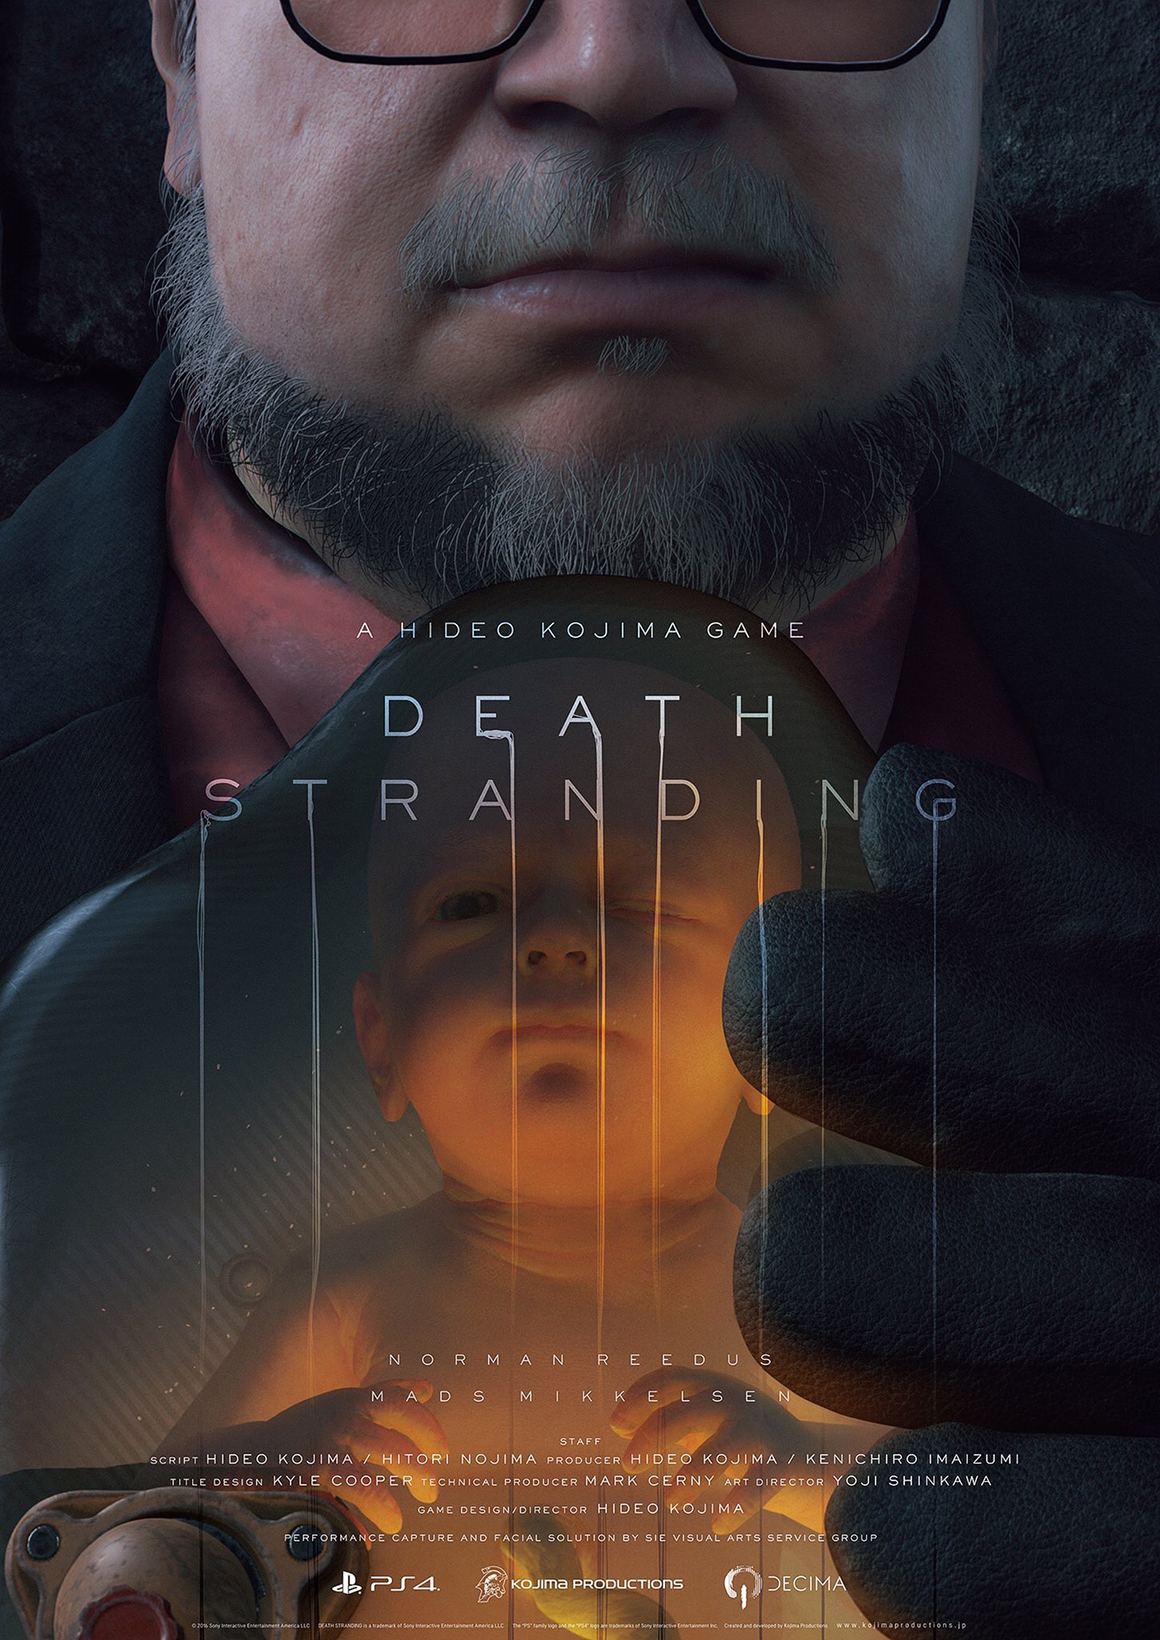 Hideo Kojima Death Stranding Trailer Guillermo del Toro Mads Mikkelsen